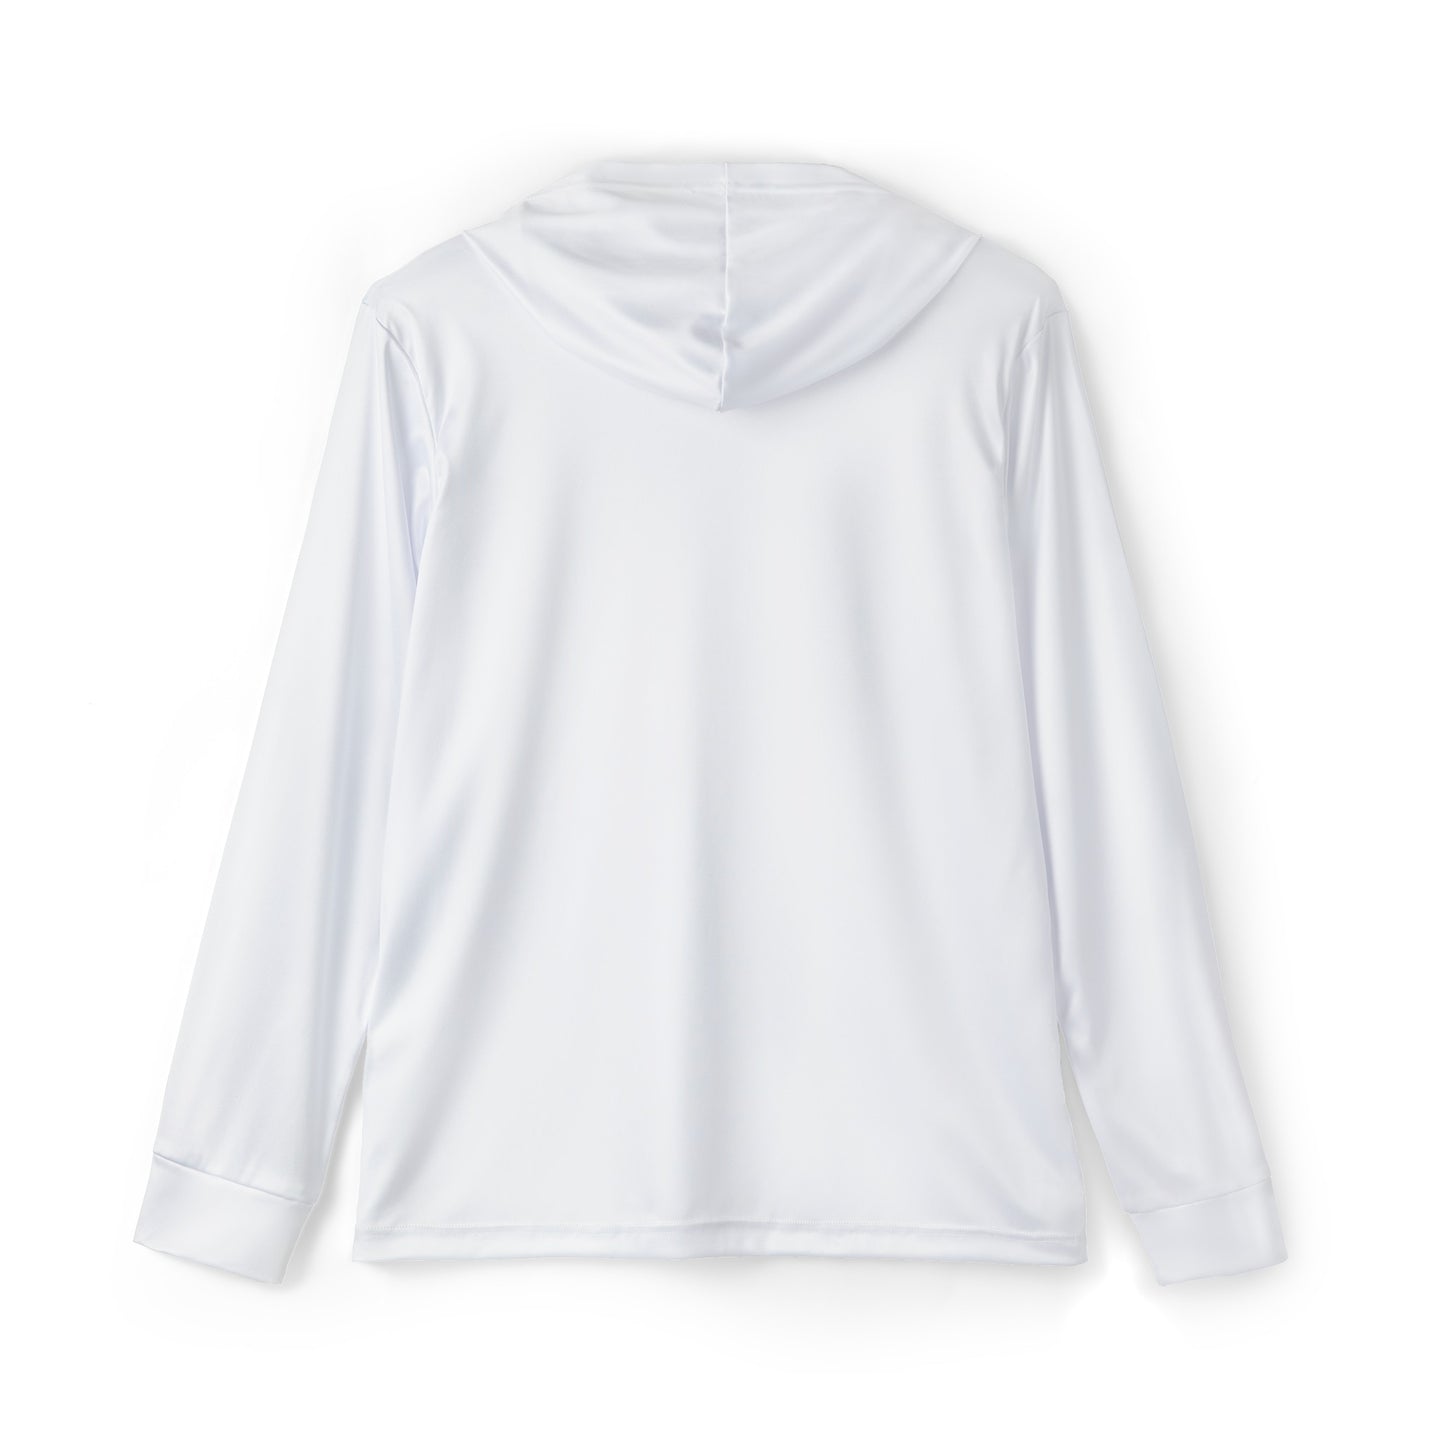 NKF White Hooded Performance Shirt